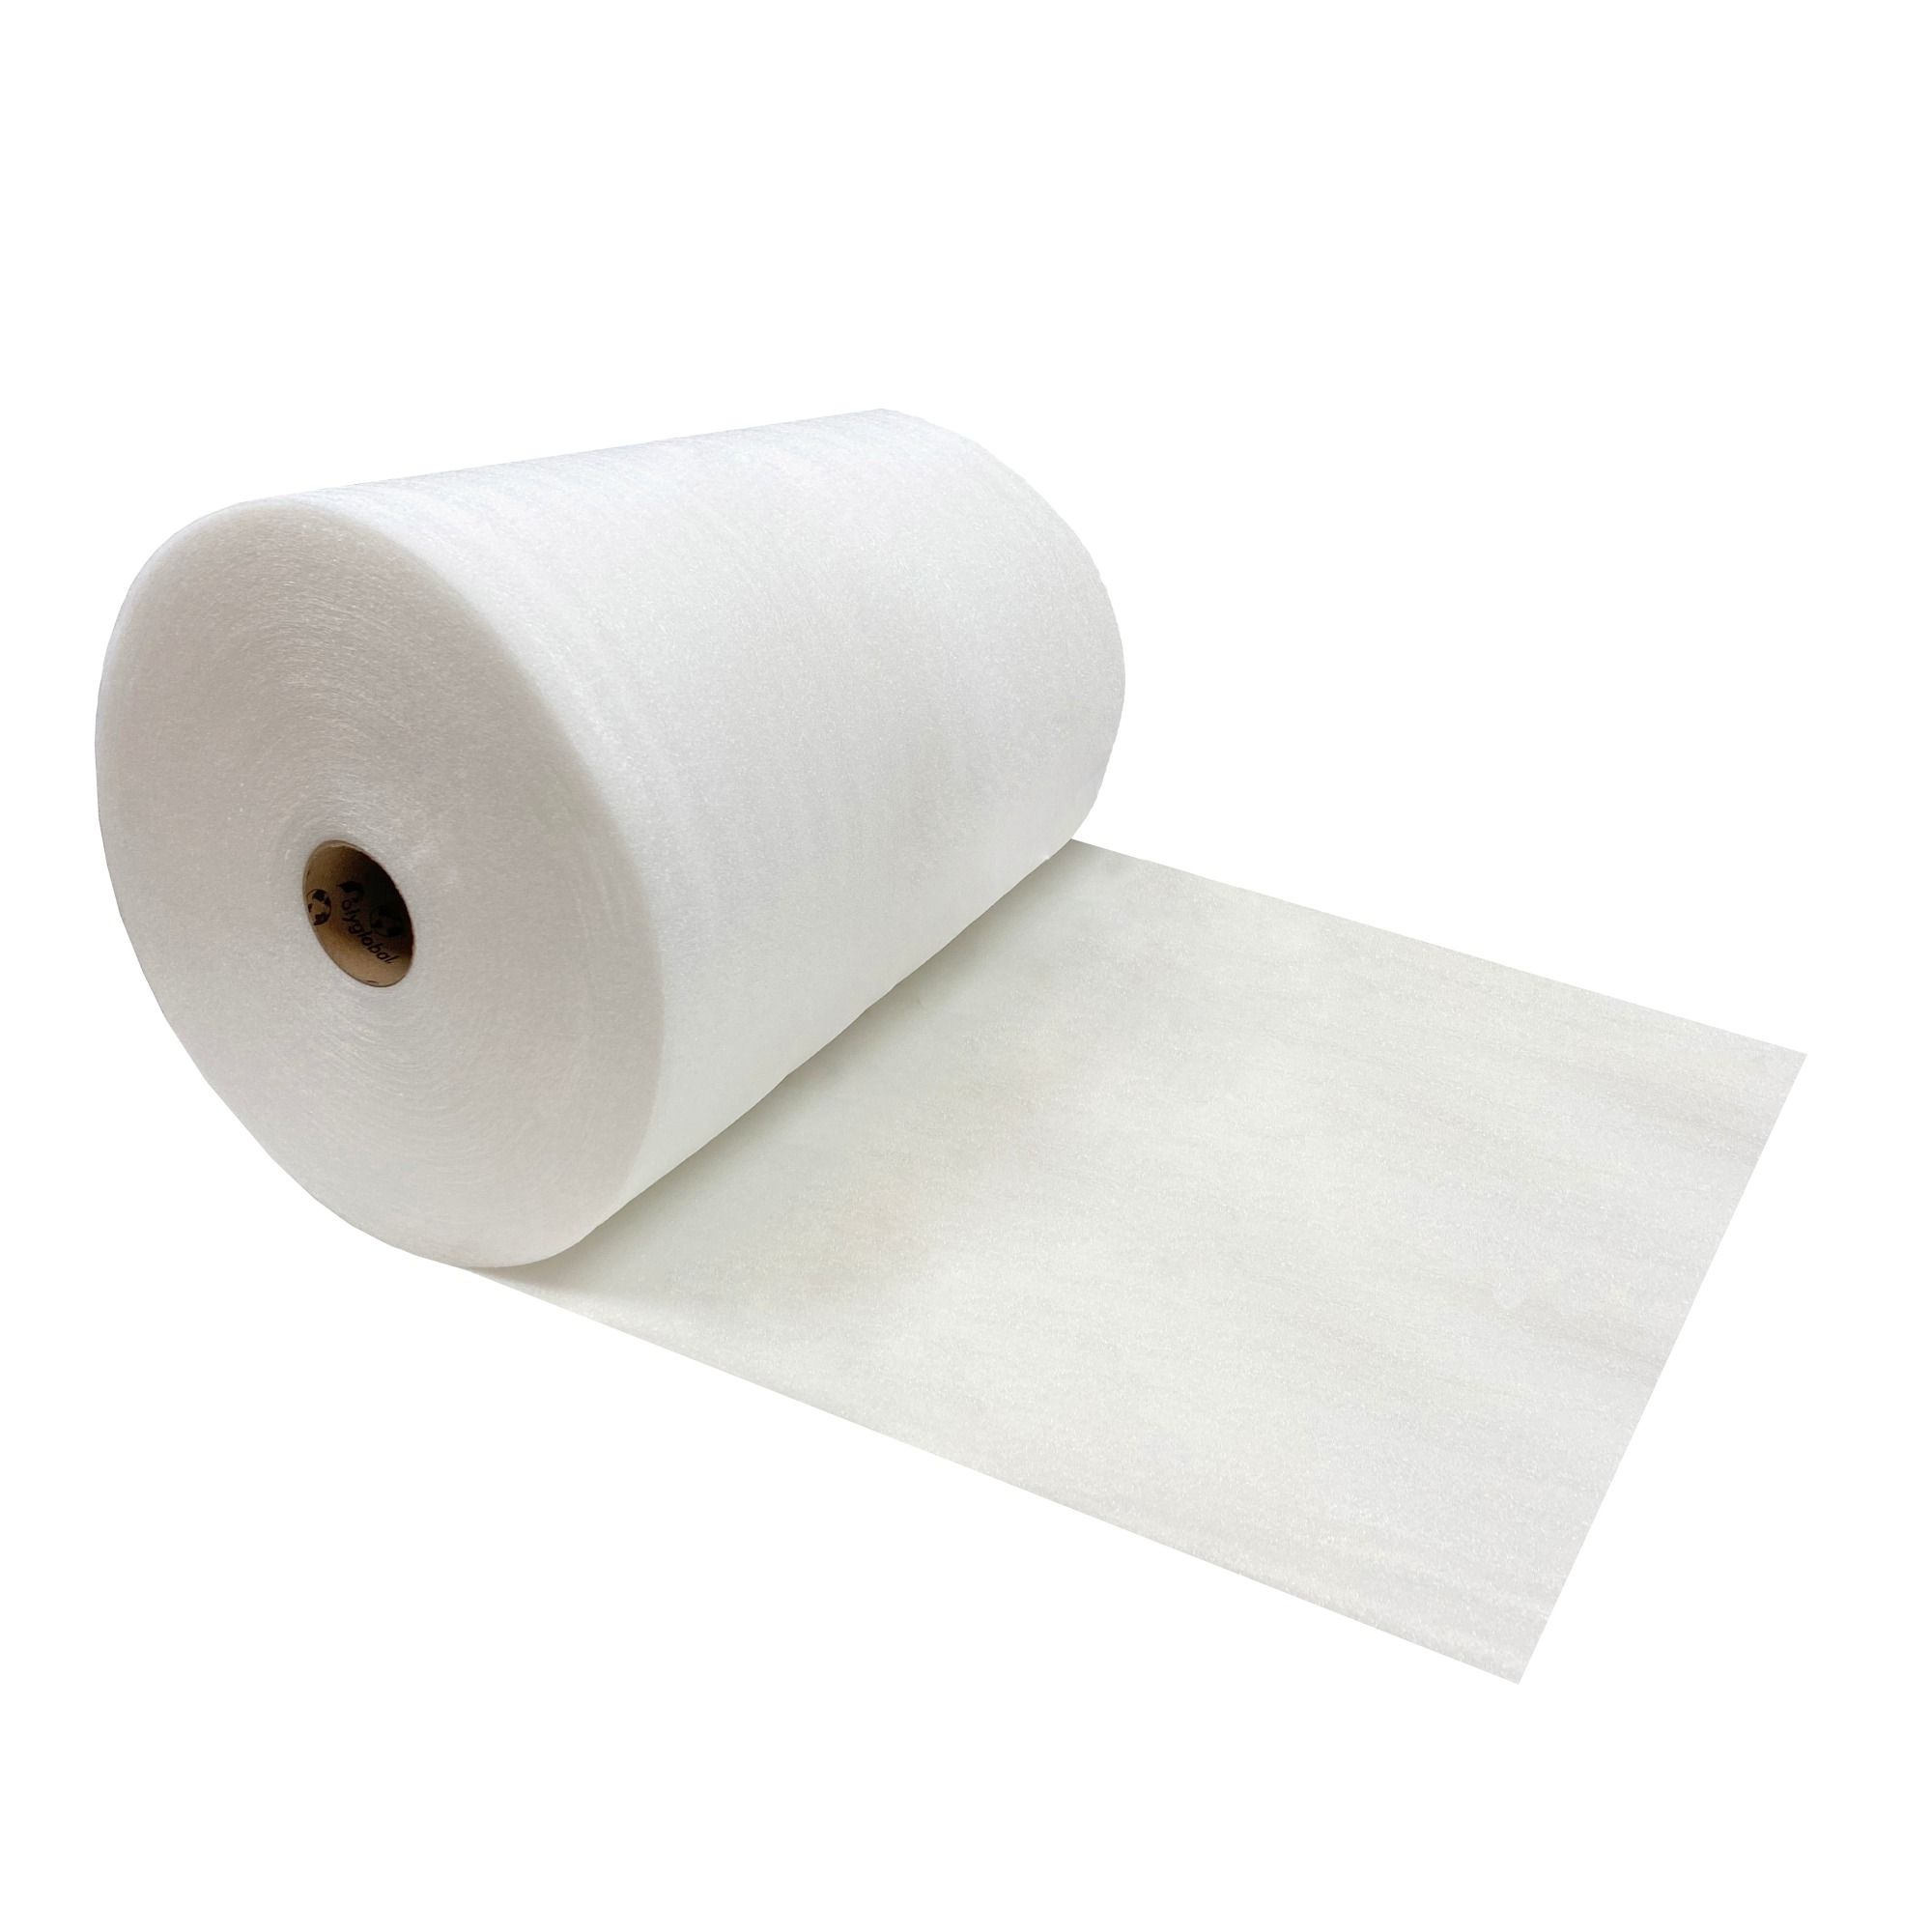 Wholesale Bulk foam padding flexible Supplier At Low Prices 